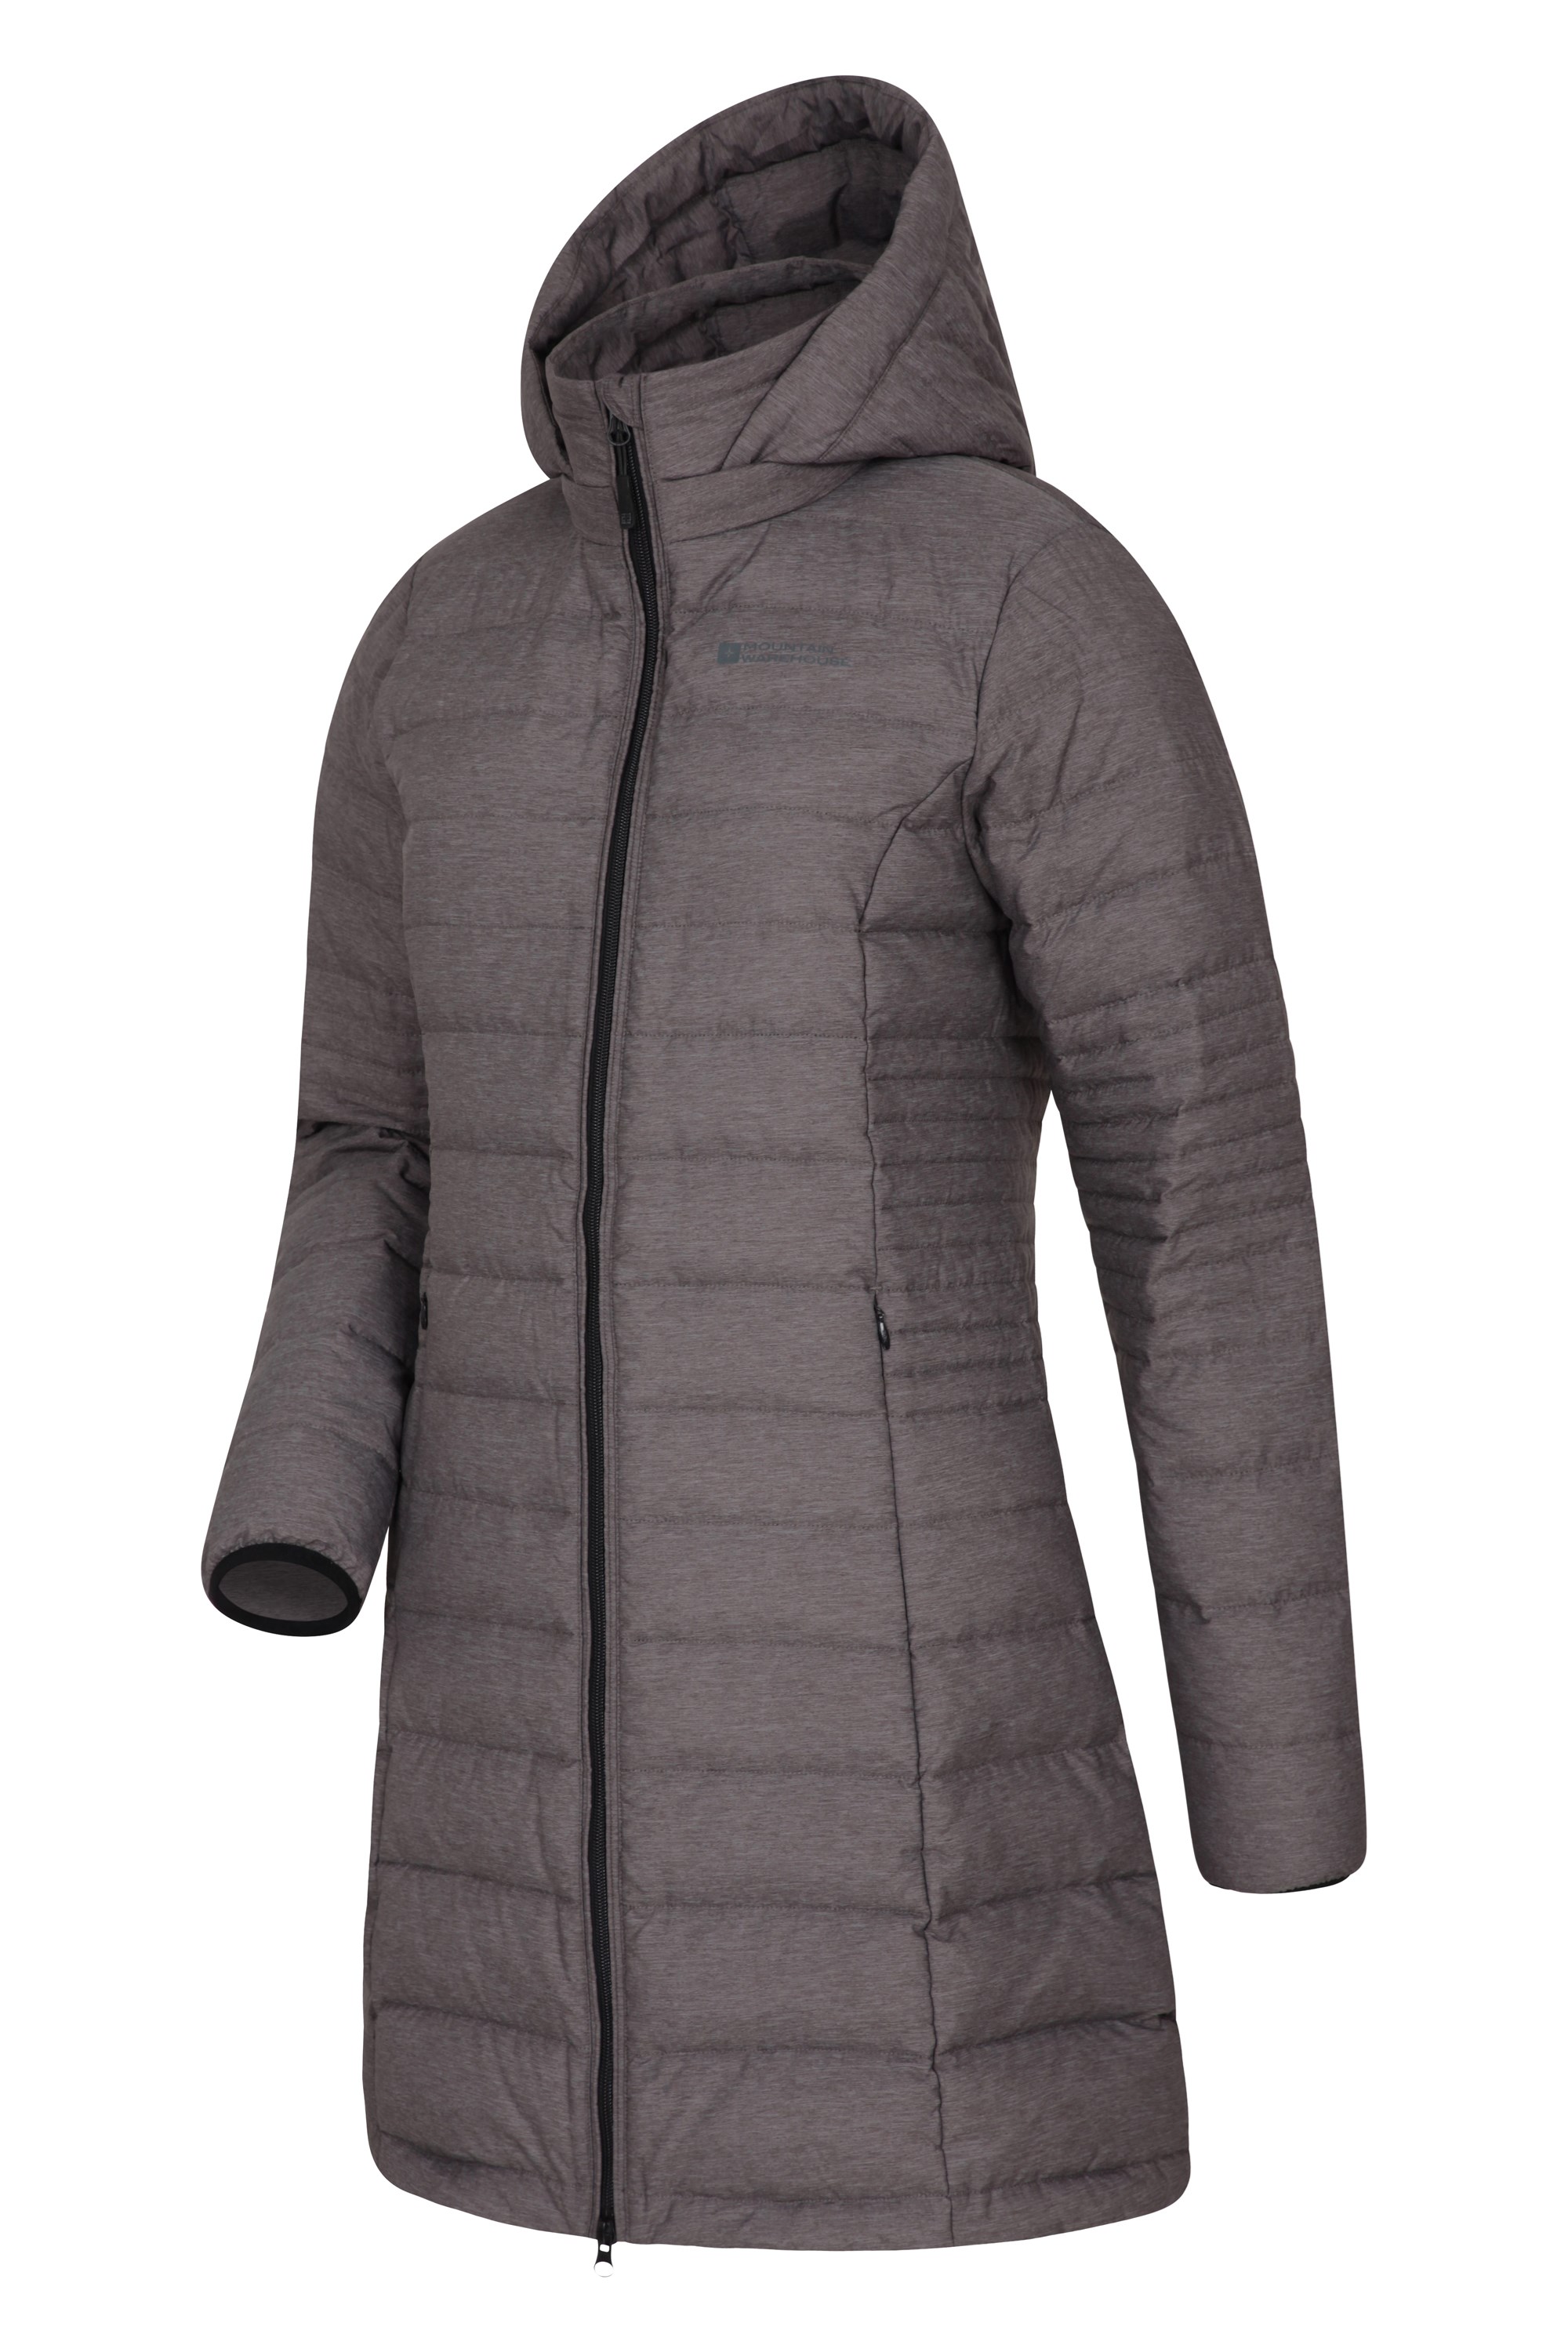 Mountain Warehouse Mountain Warehouse Womens Long Down Padded Jacket Lightweight Ladies Winter Coat 